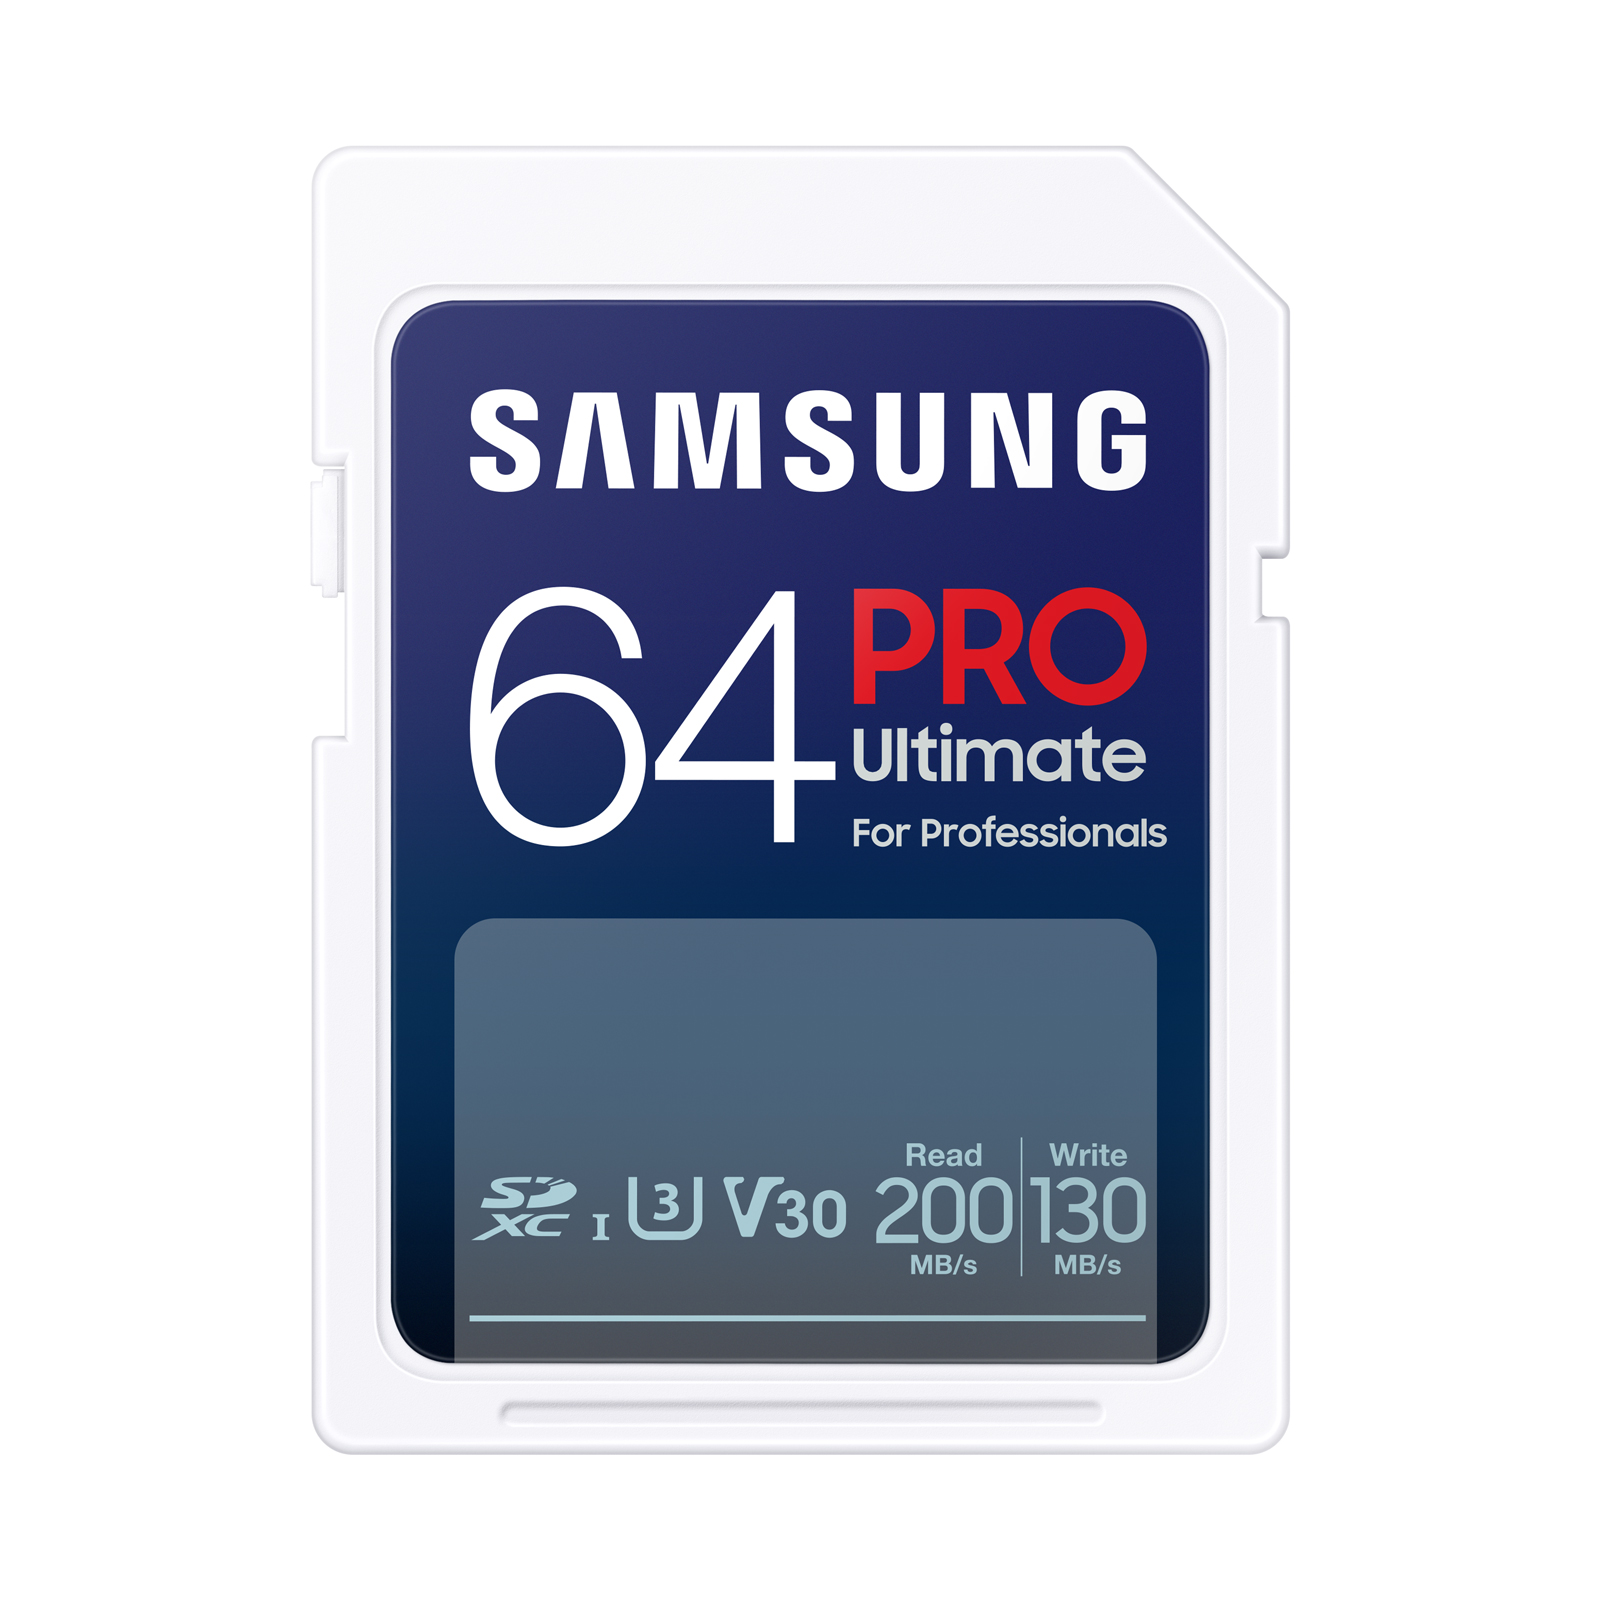 Samsung SD Card PRO Ultimate (64GB)